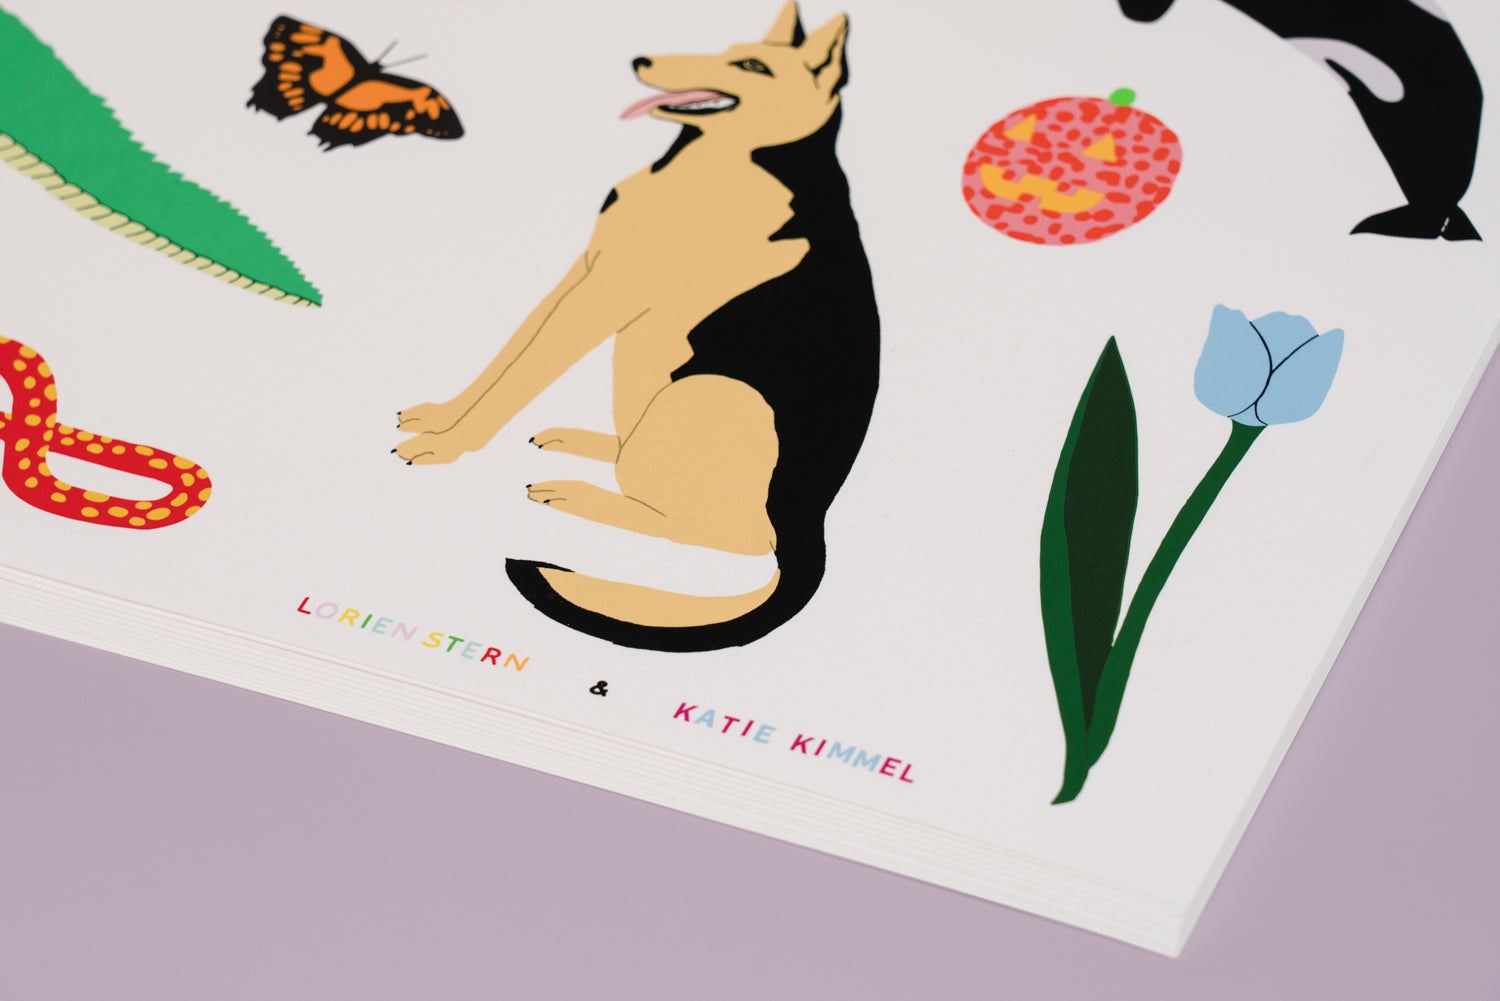 Katie Kimmel + Lorien Stern - "You Are Good" variant print